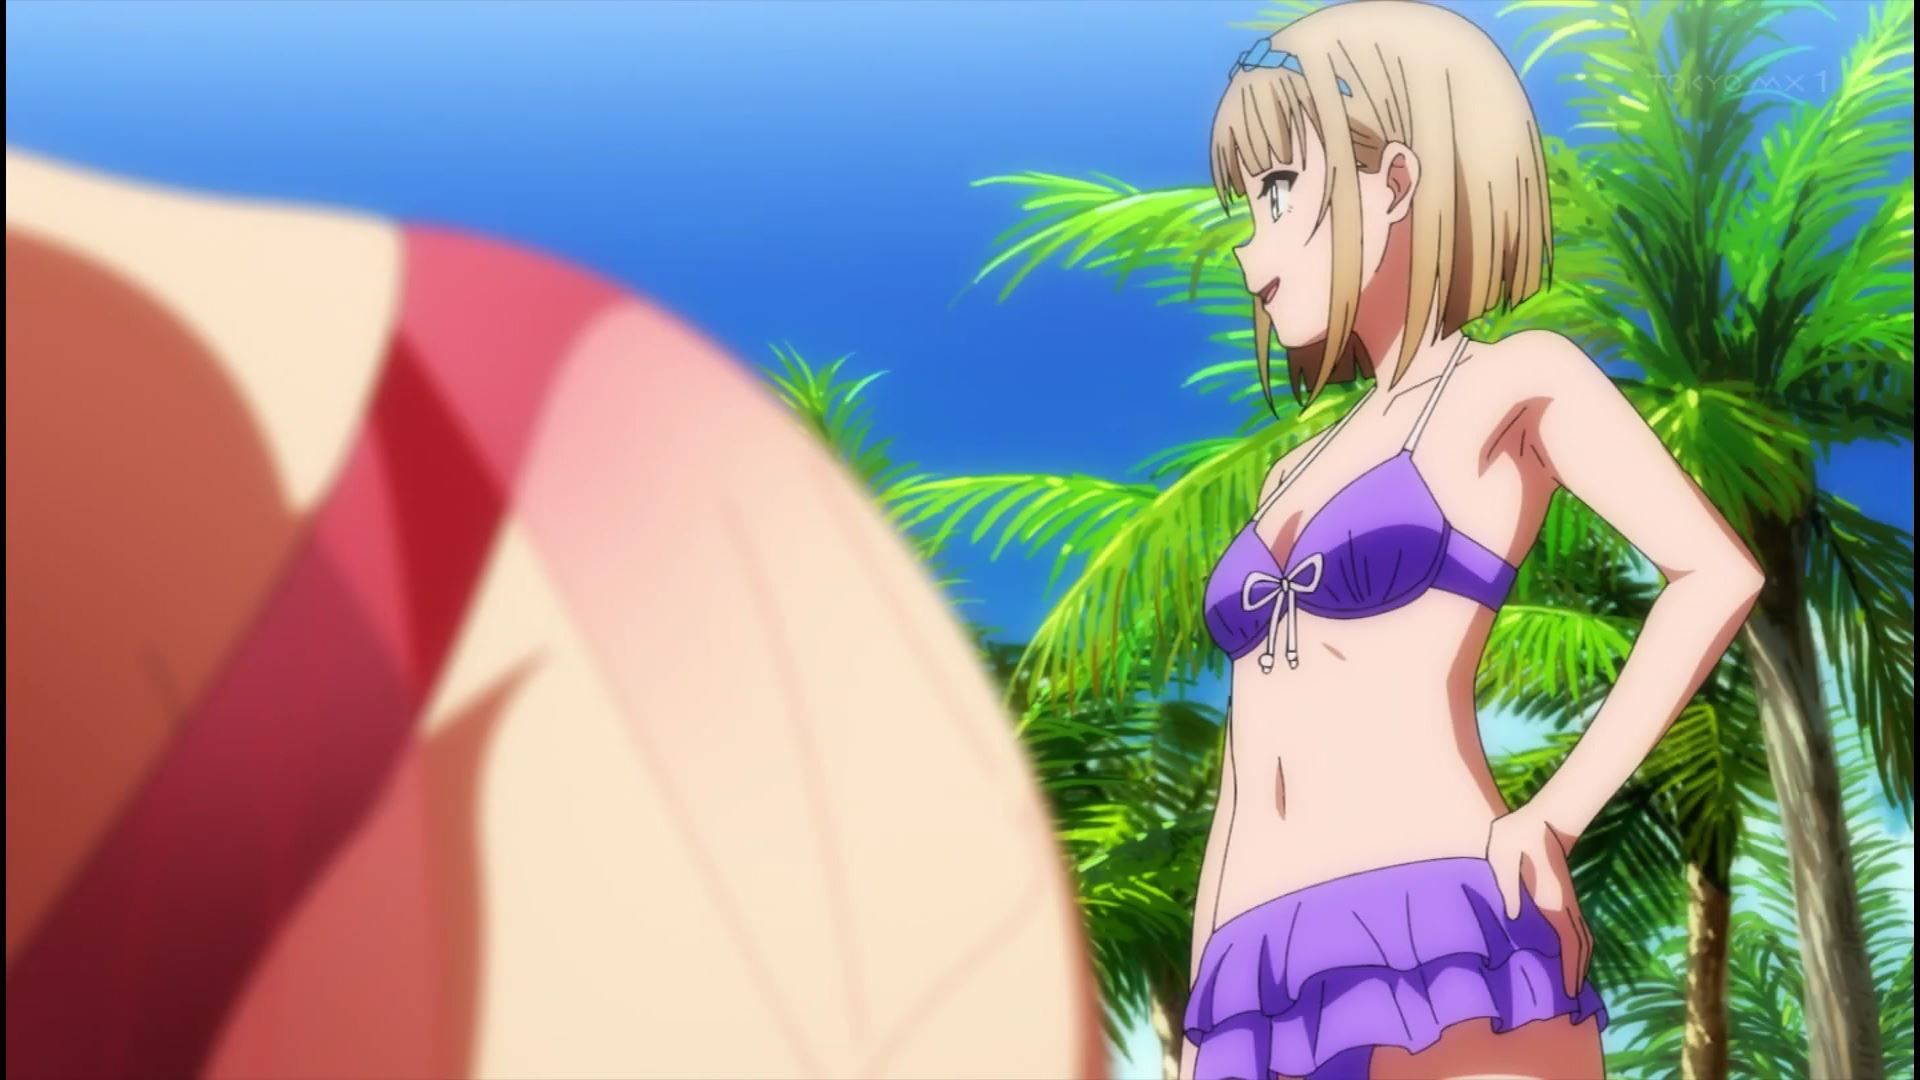 Anime [22/7 (Nanabun Nonijuuni)] 6 episodes erotic scene of girls erotic swimsuit! 3